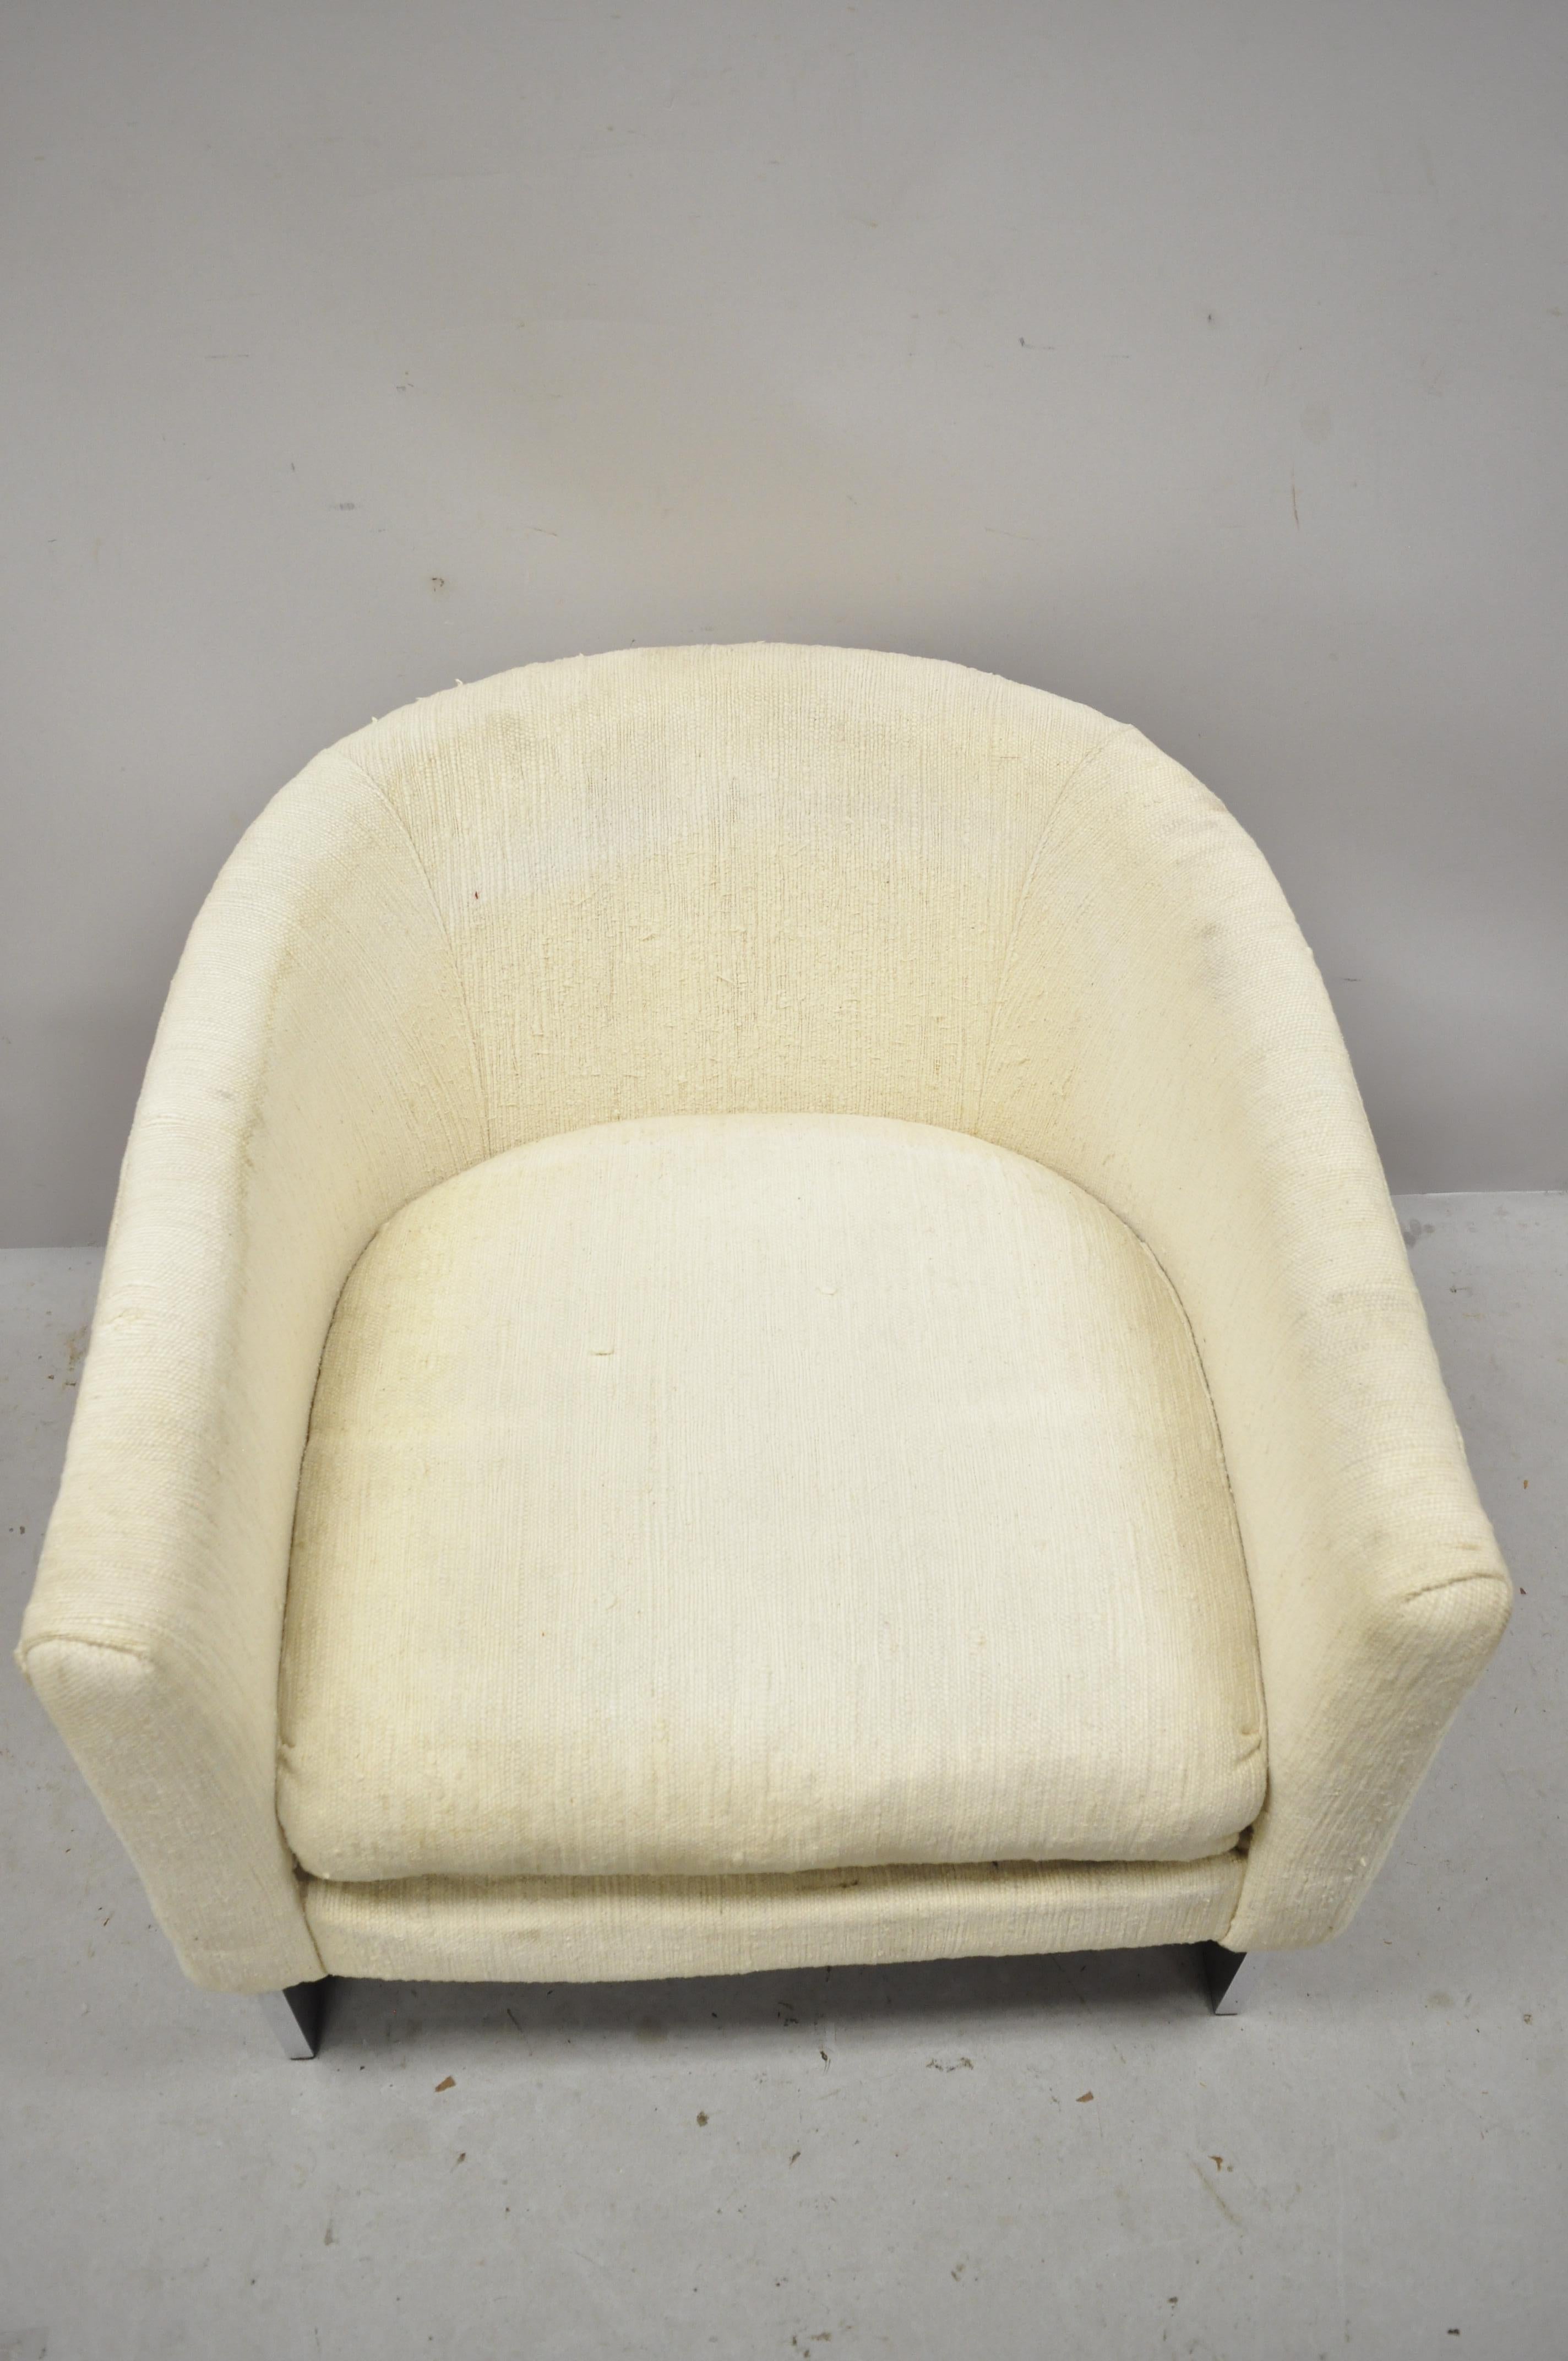 Fabric Vintage Midcentury Rowe Chrome Barrel Back Milo Baughman Lounge Club Chair